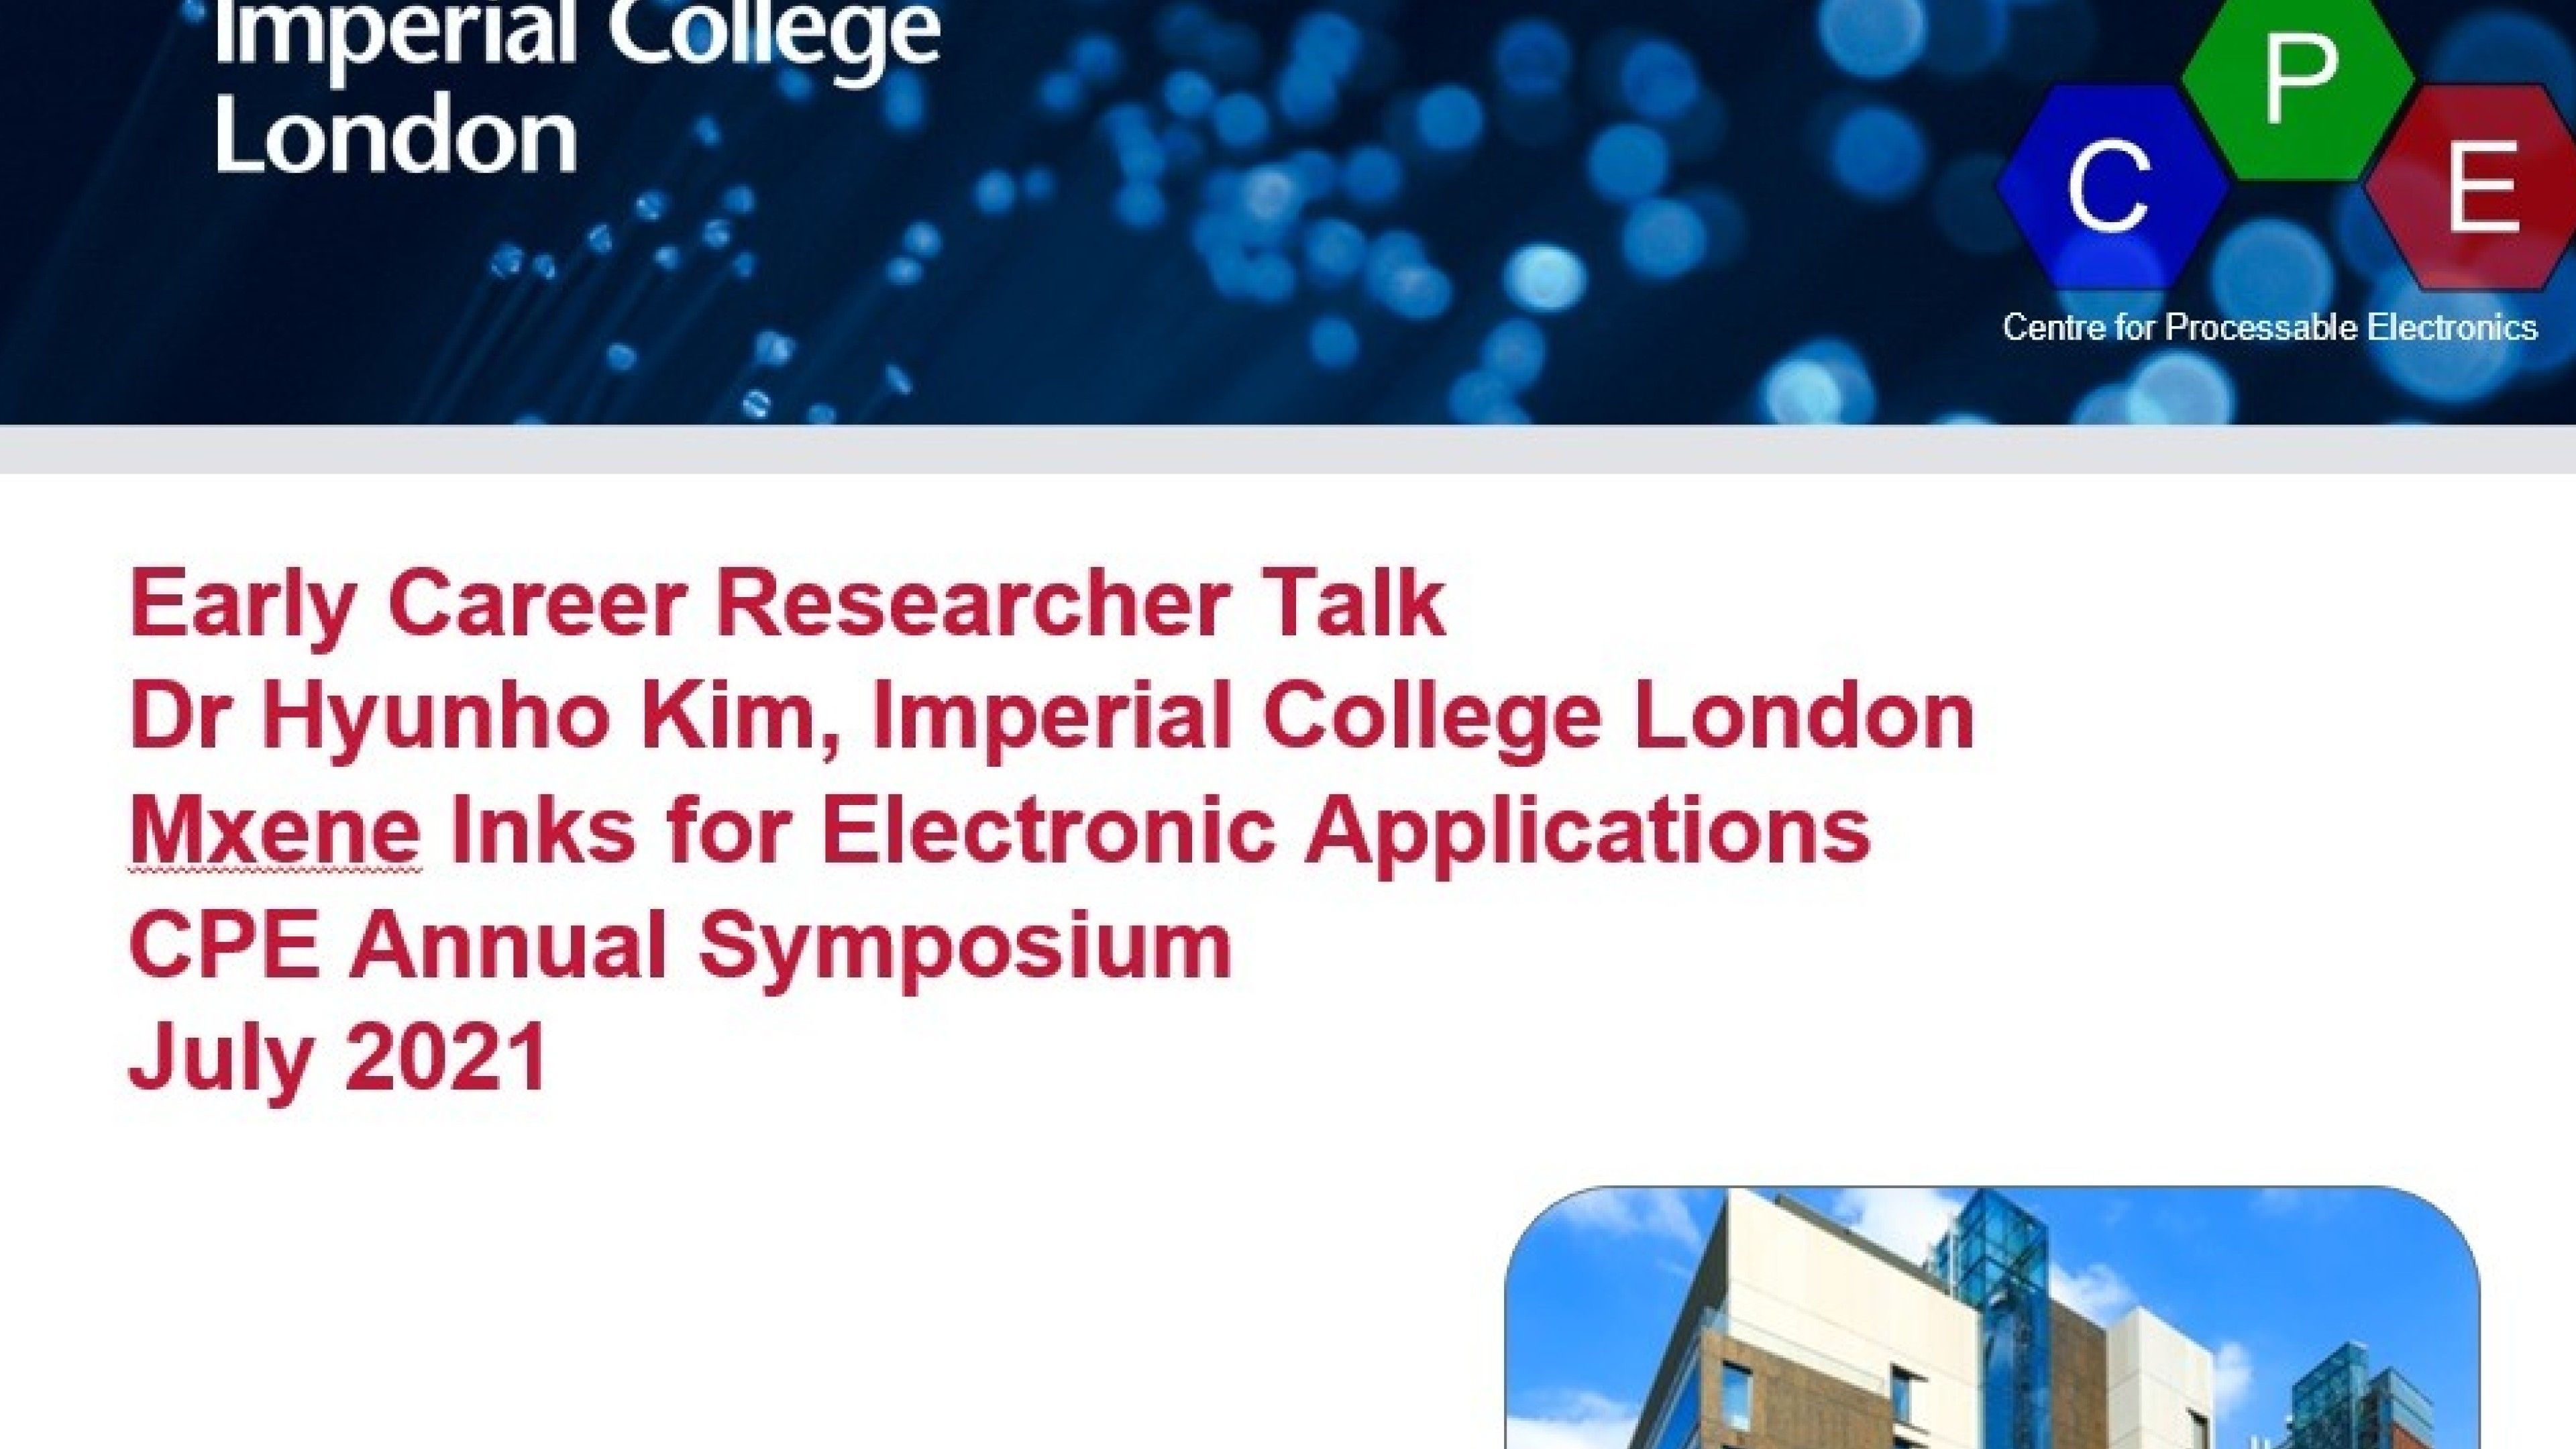 Dr Hyunho Kim at CPE Annual Symposium 2021